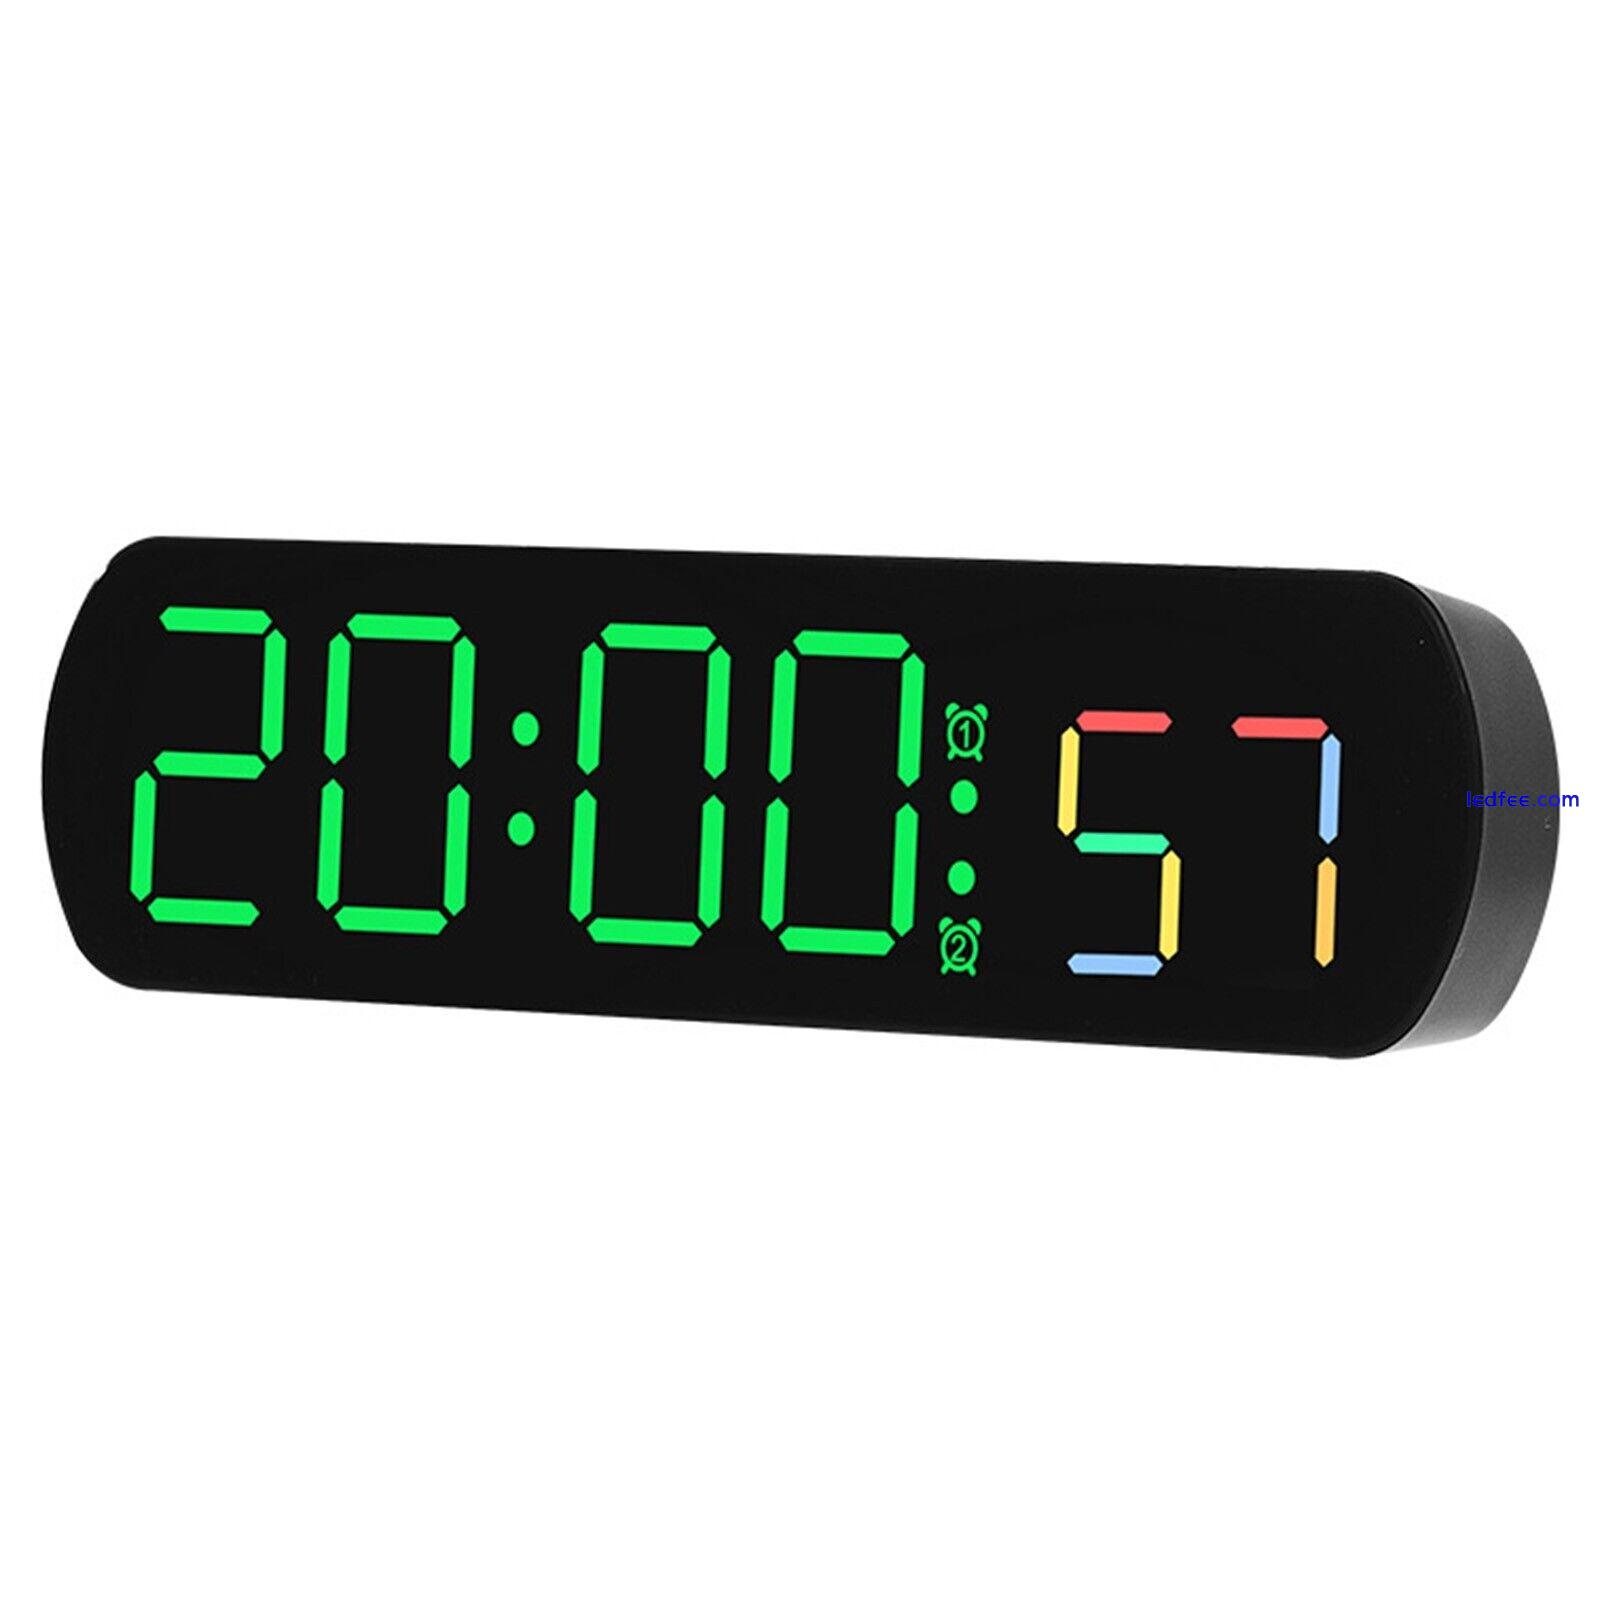 Sleek rectangular alarm clock with high definition LED display and countdown 0 